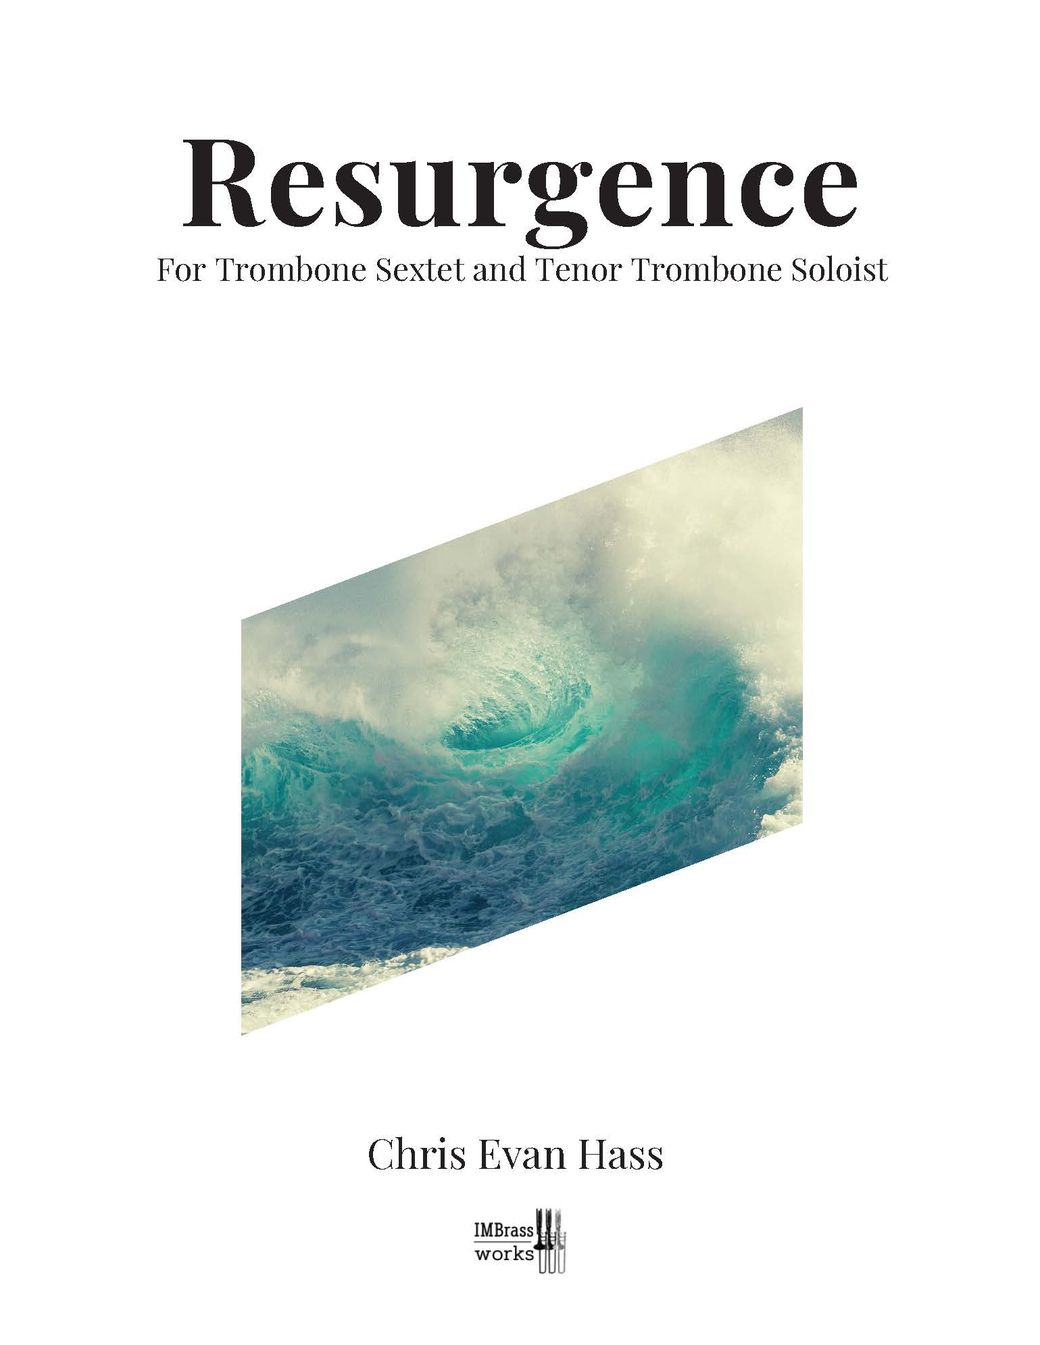 Chris Evan Hass: Resurgence for Tenor Trombone solo and Trombone Choir